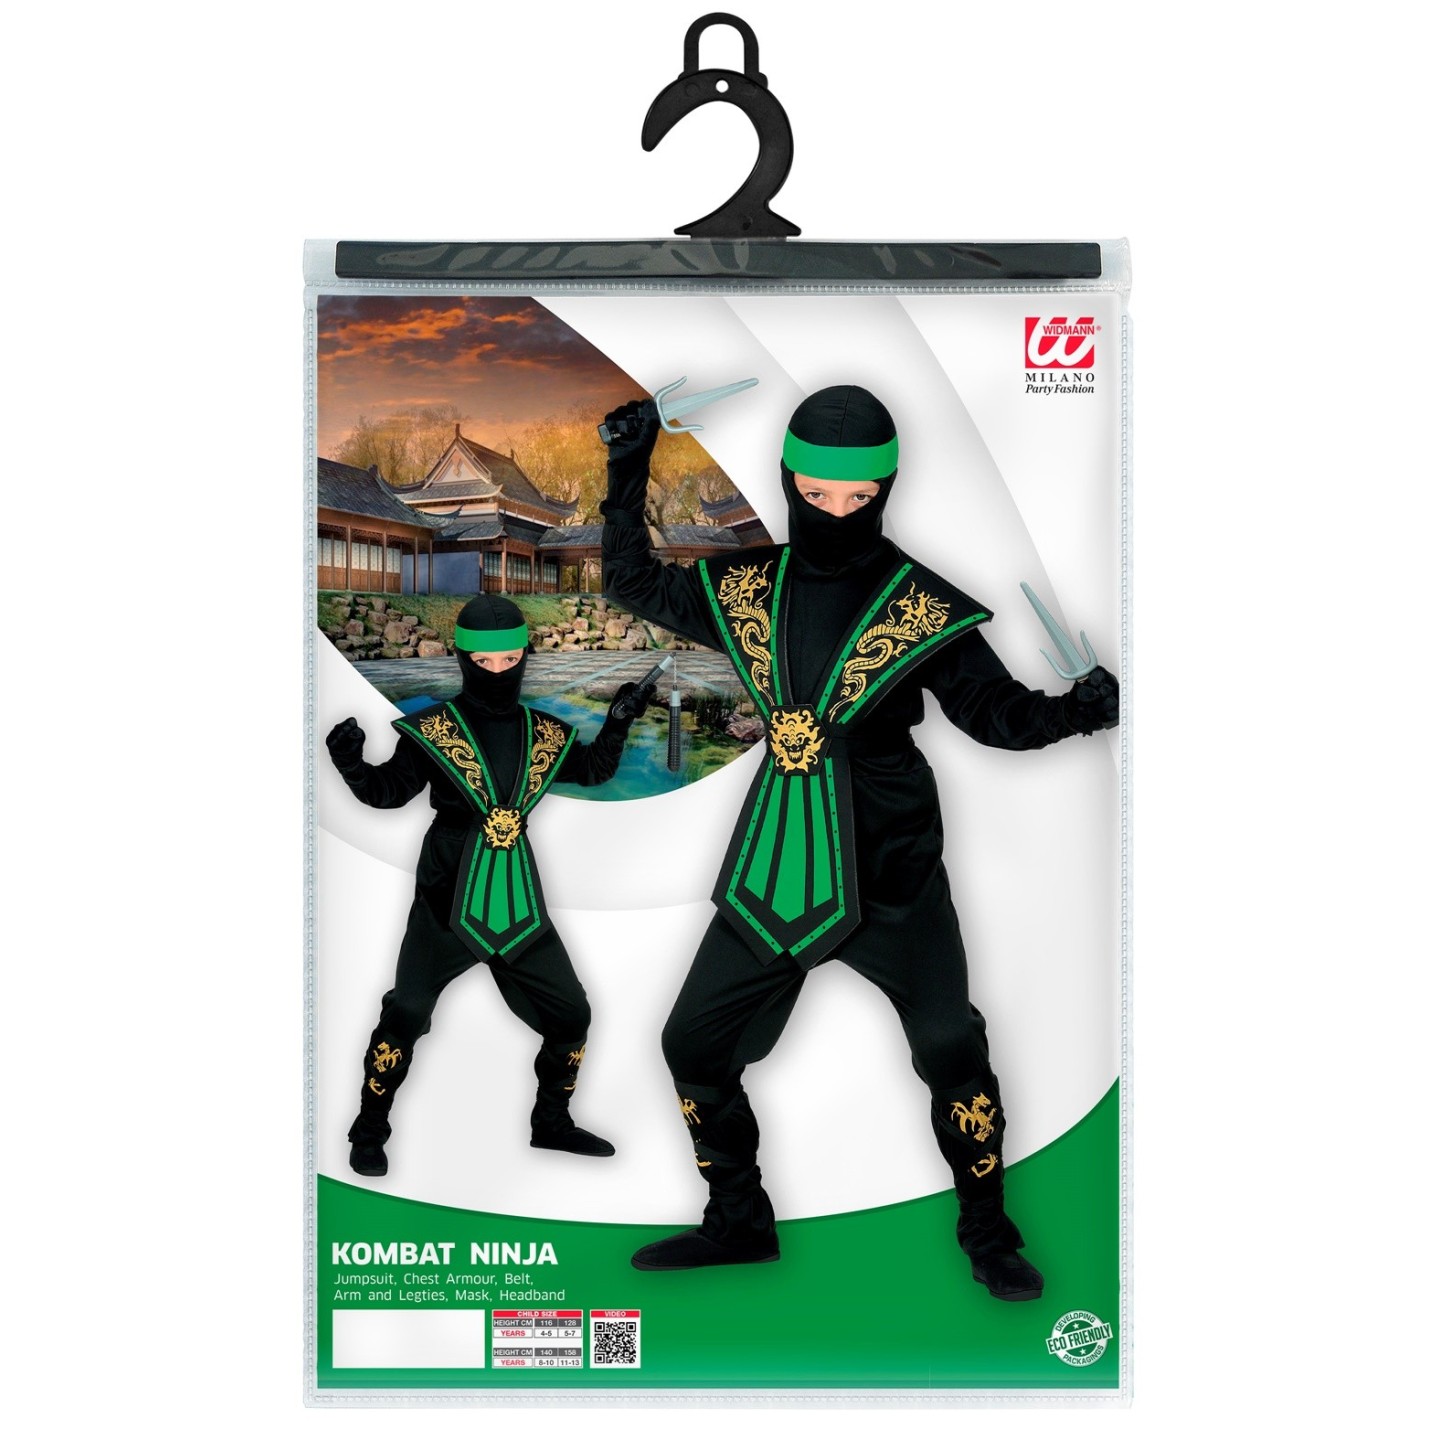 Asser Conventie vrede Ninja kostuum groen Kombat kind| Jokershop.be - Carnavalskleding